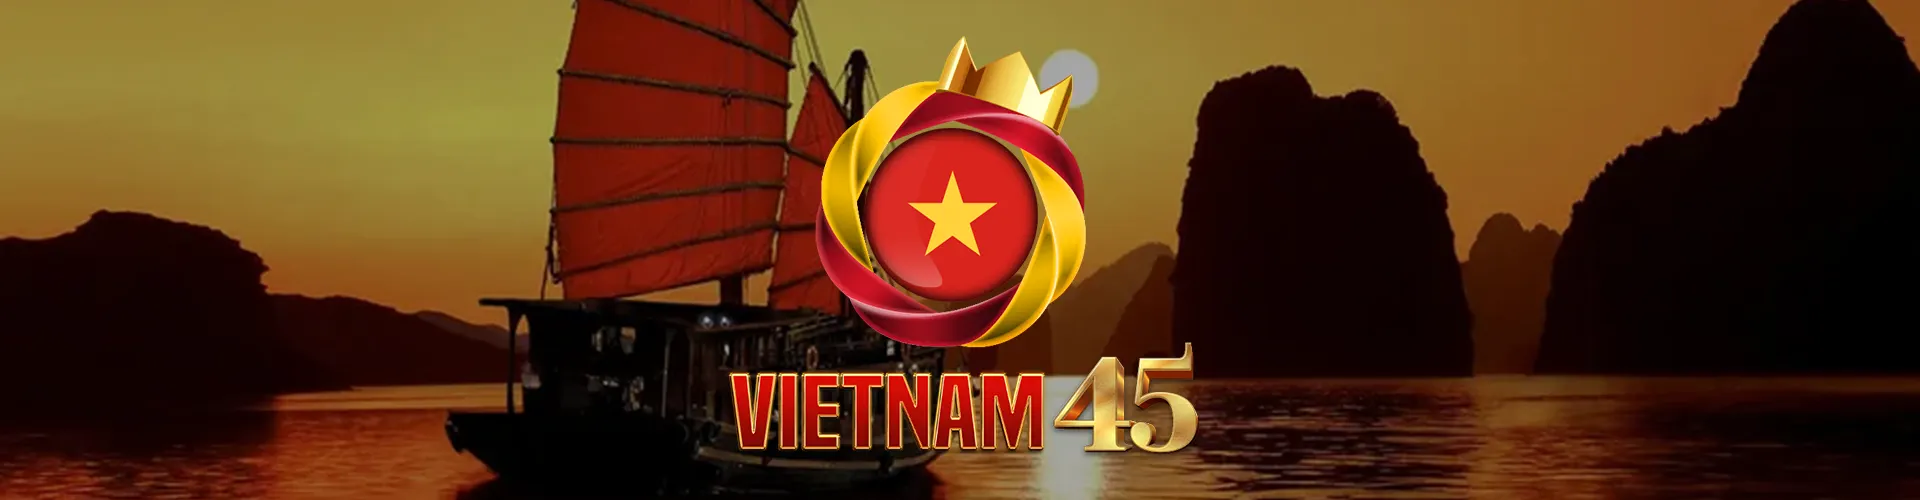 Toto Vietnam45 Pools